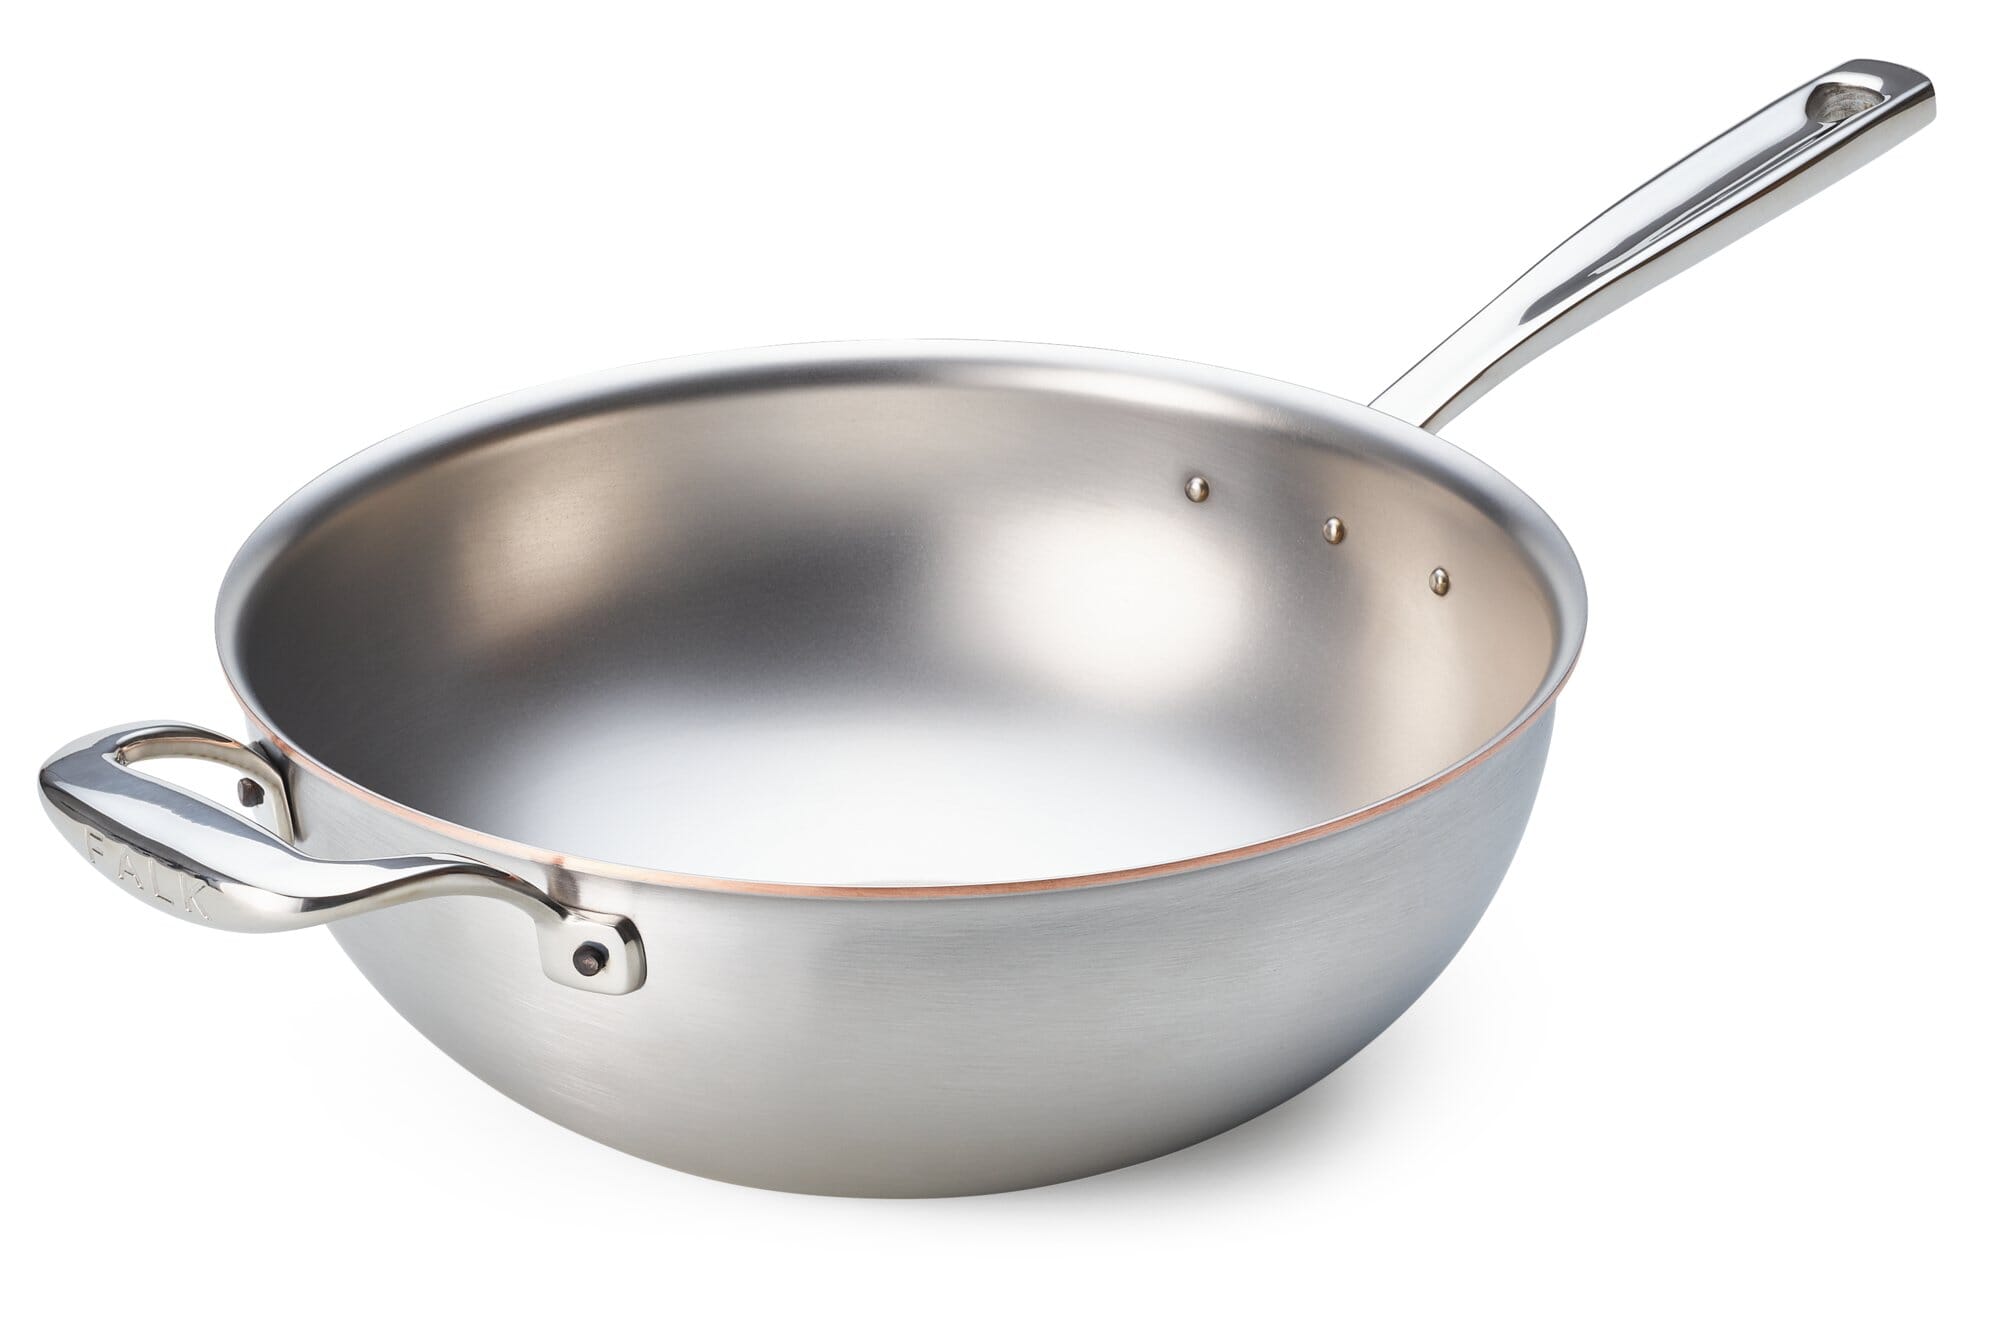 Risotto pan or wok copper core